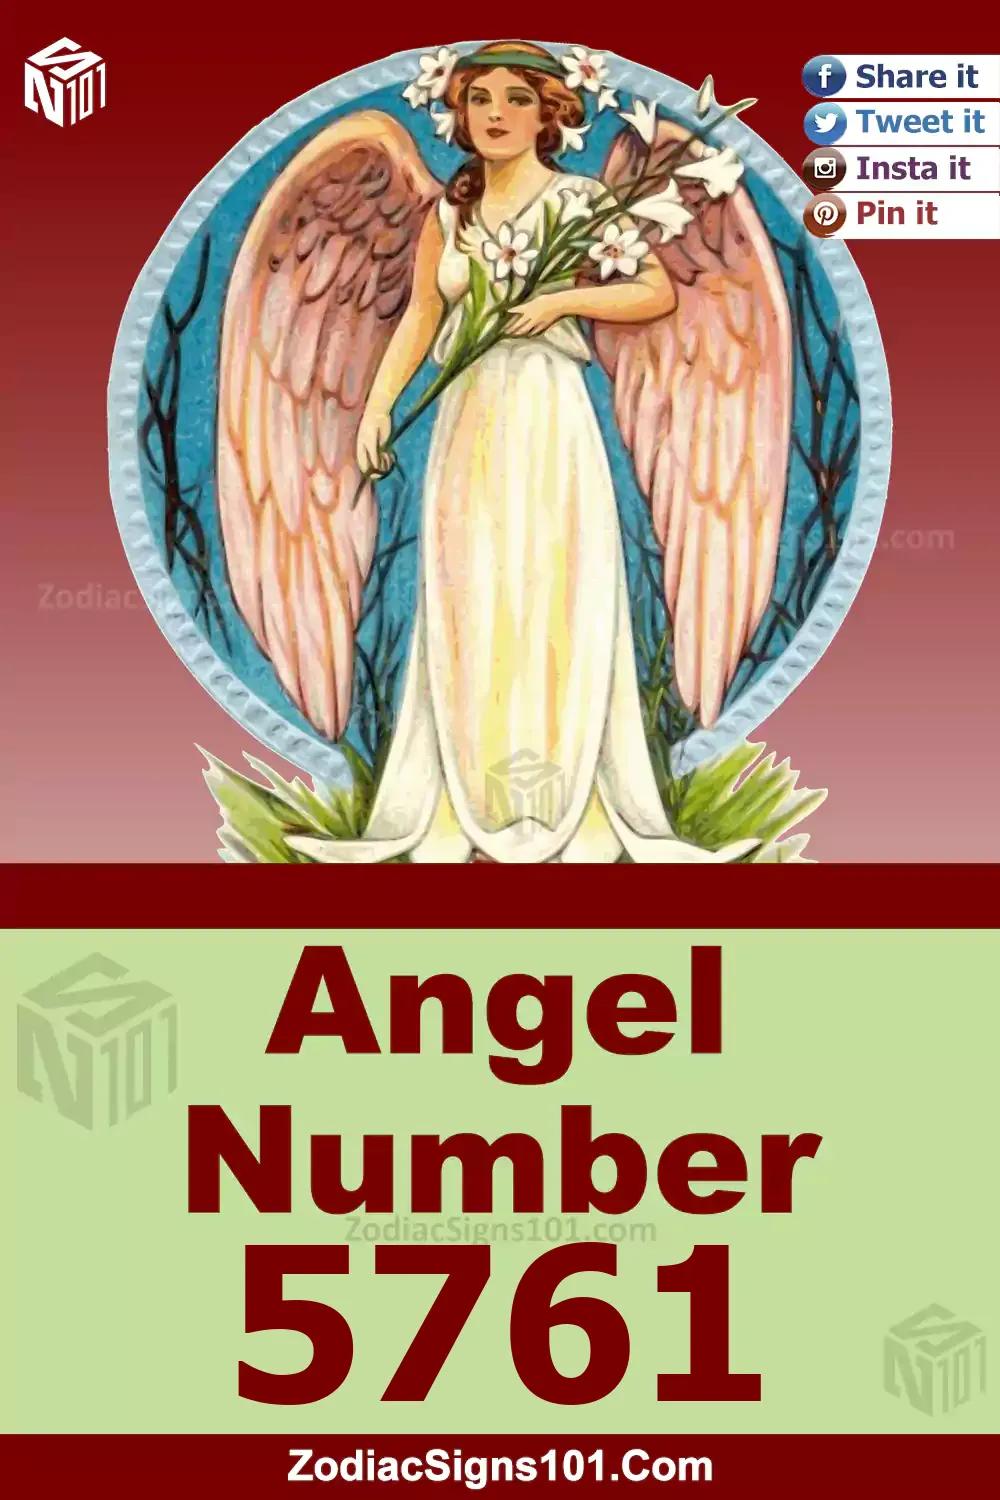 5761-Angel-Number-Meaning.jpg